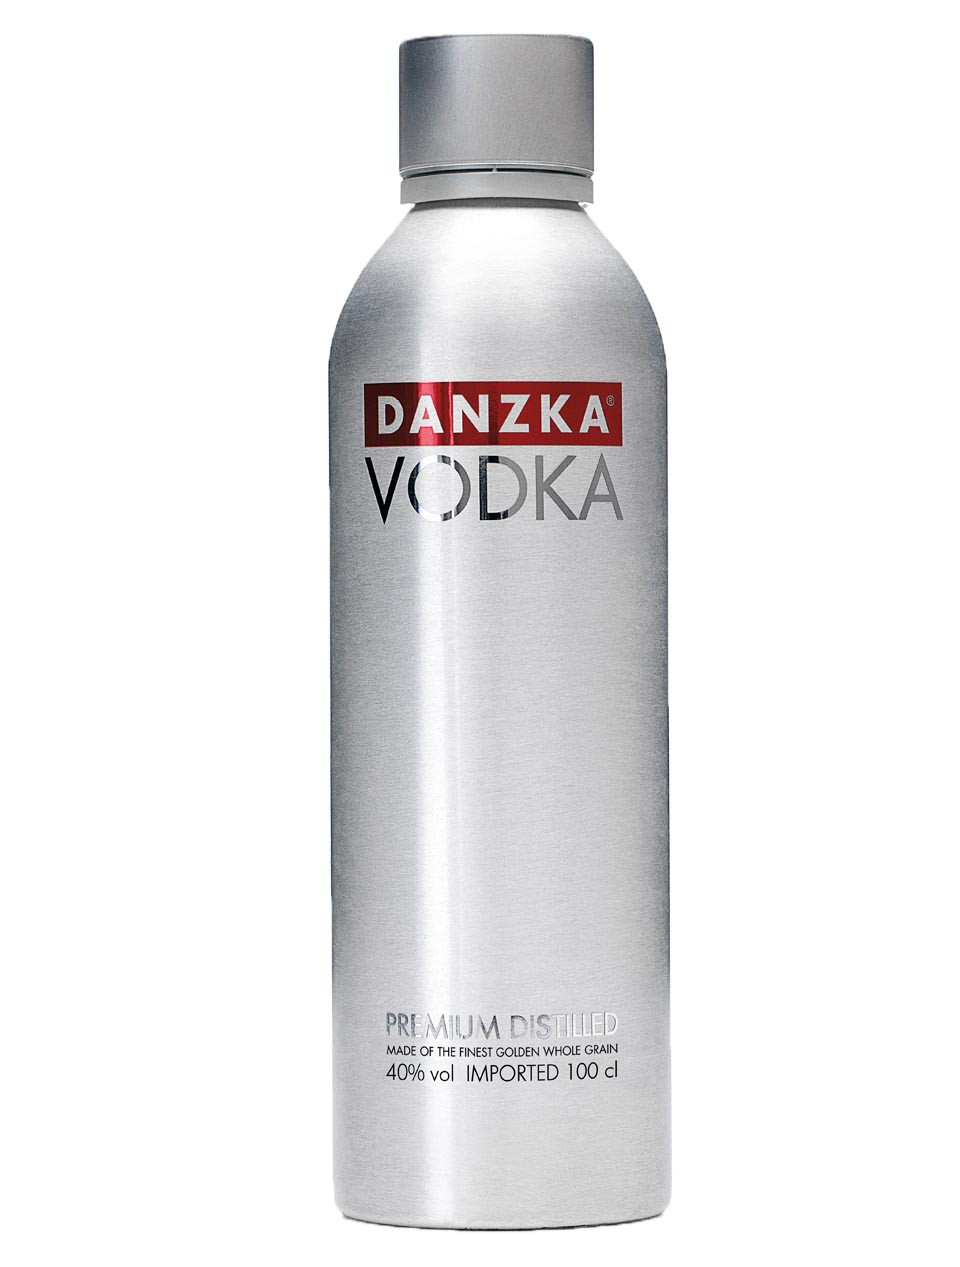 Vodka Danzka Original